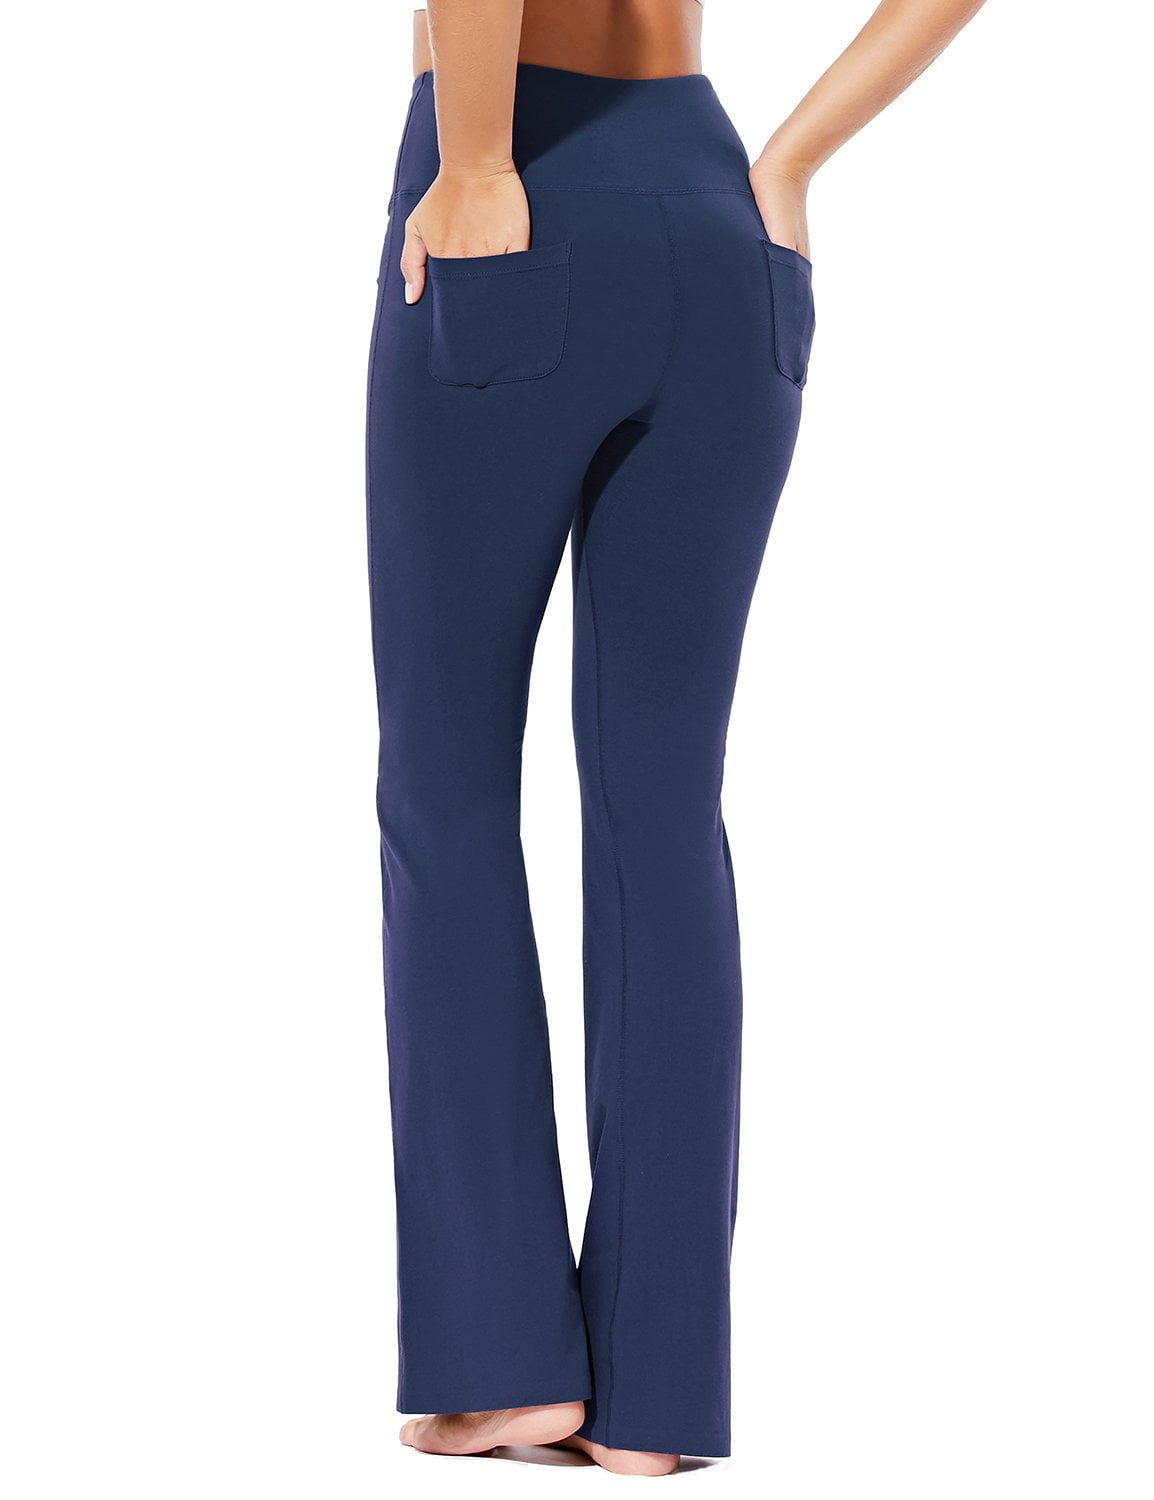 BALEAF Women's Cotton Bootcut Yoga Pants High Waisted Comfy Soft